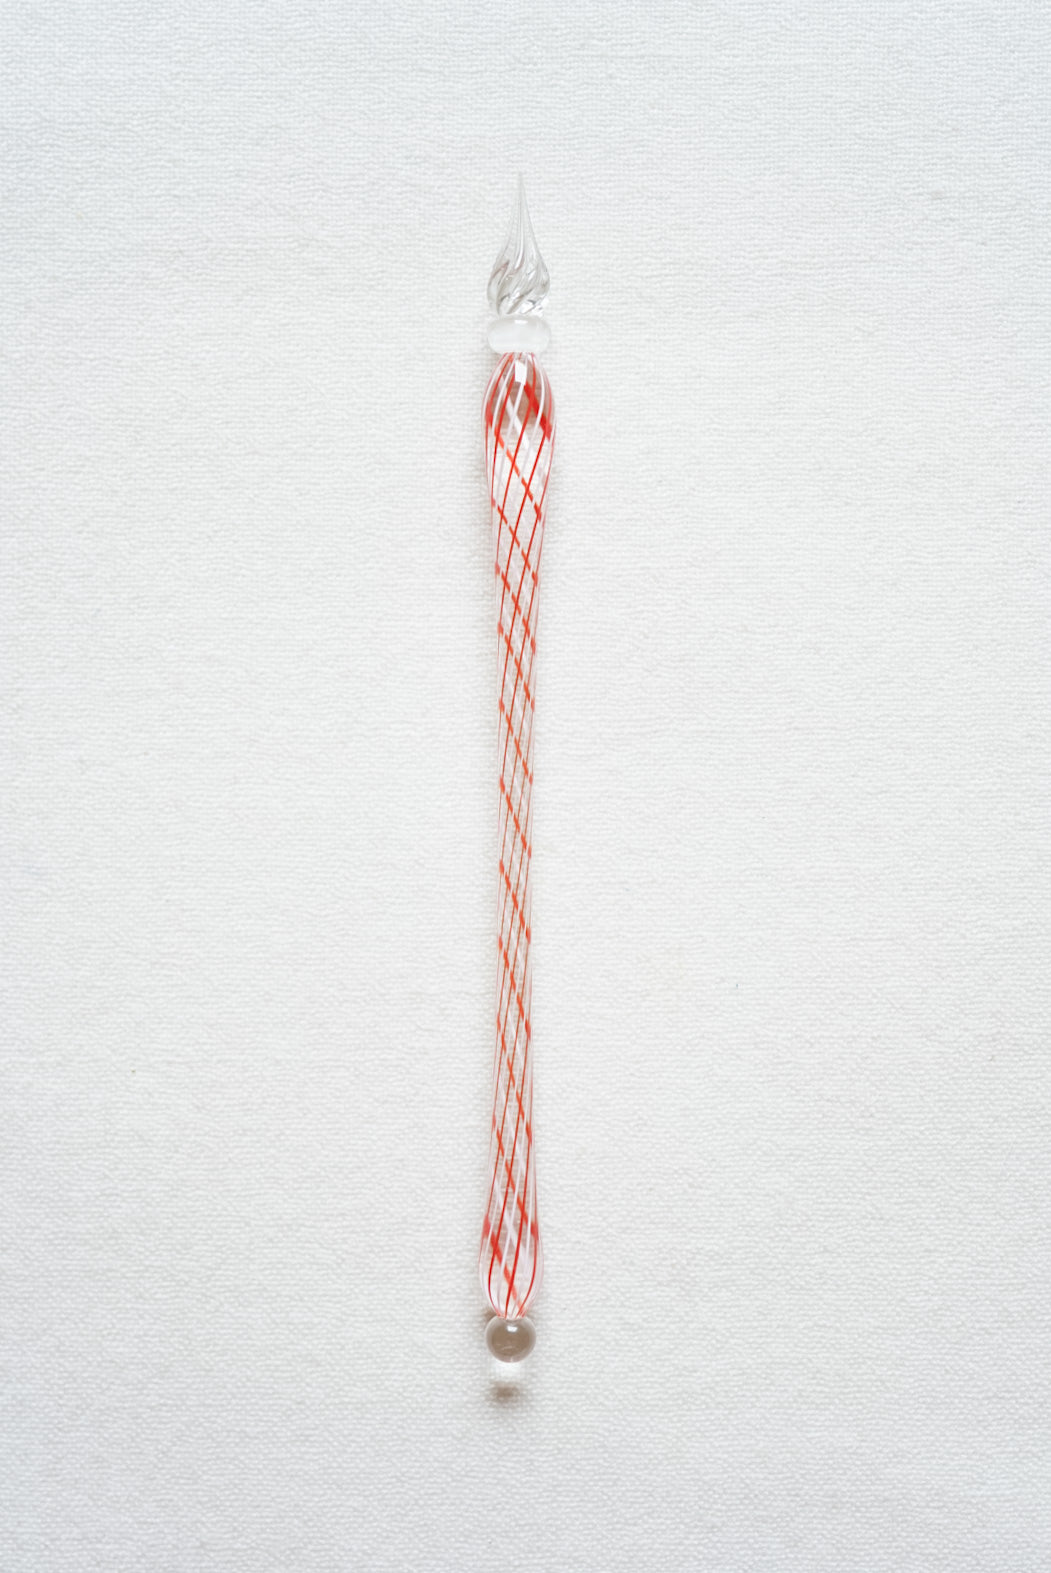 Kathryn Hastings Glass Dip Pen (Red Swirl)